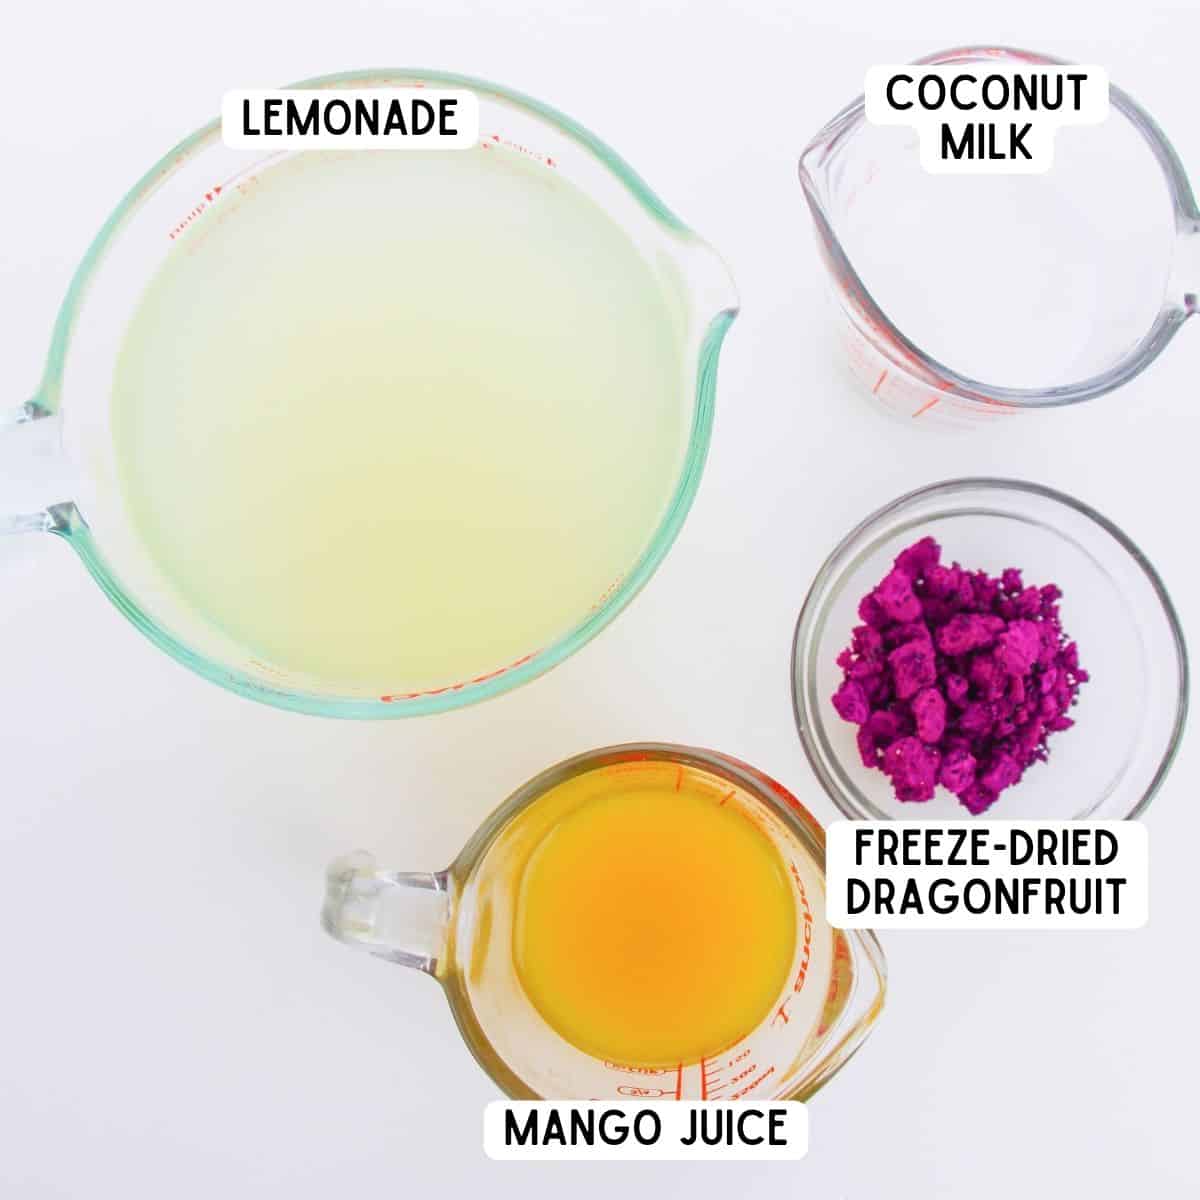 Ingredients for copycat dragon drink from Starbucks: lemonade, freeze dried dragonfruit, mango juice, and coconut milk.